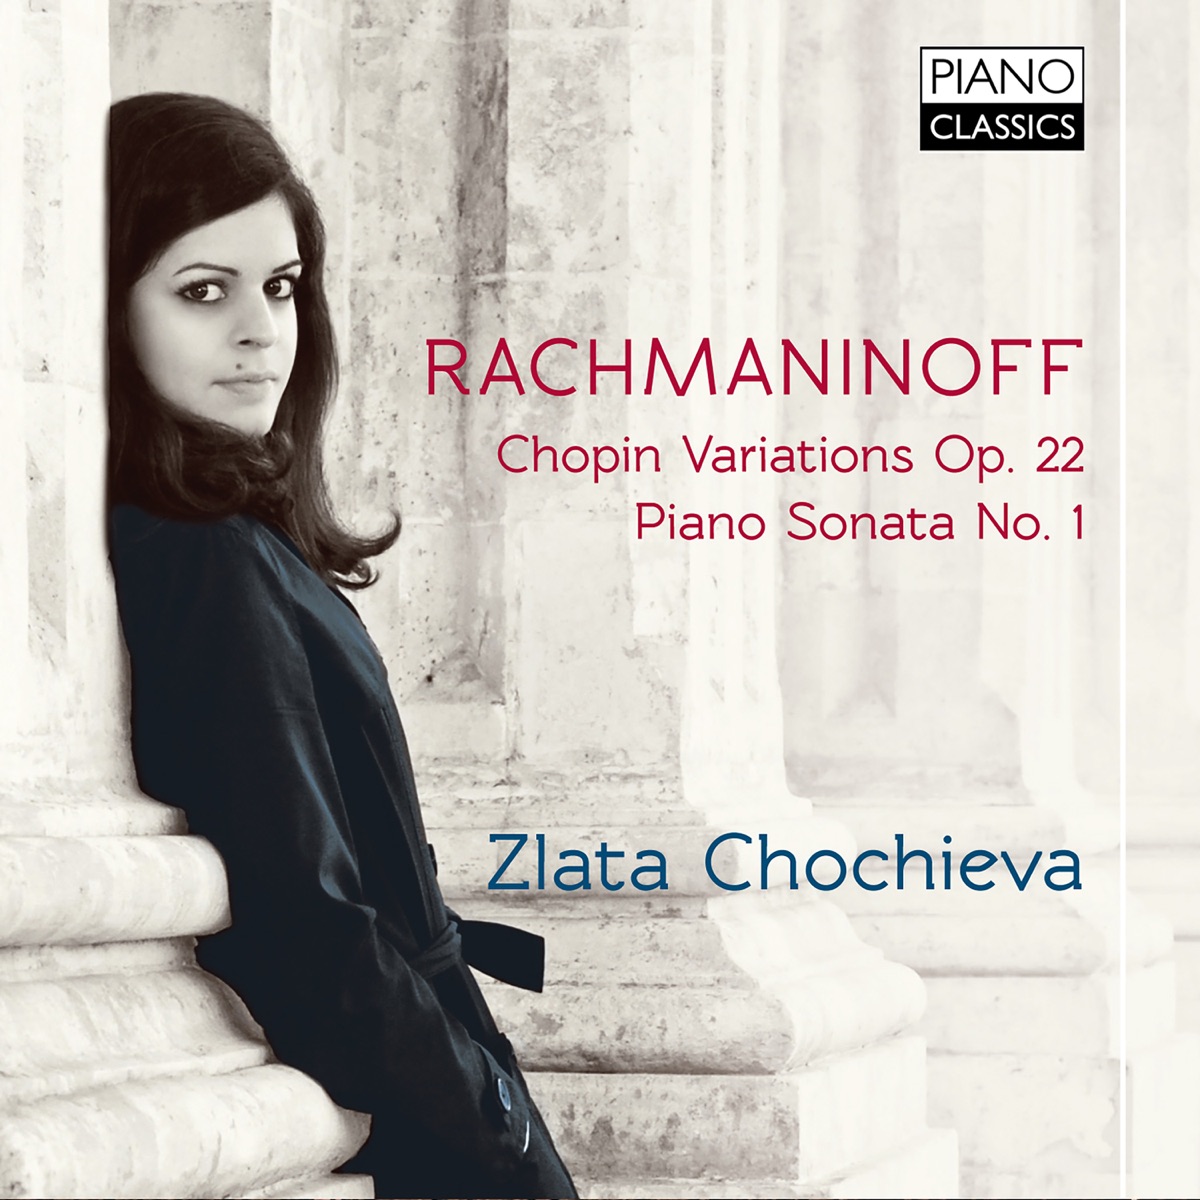 Sergei Rachmaninoff: Chopin Variations Op. 22, Piano Sonata No. 1: Zlata  Chochieva by Zlata Chochieva on Apple Music